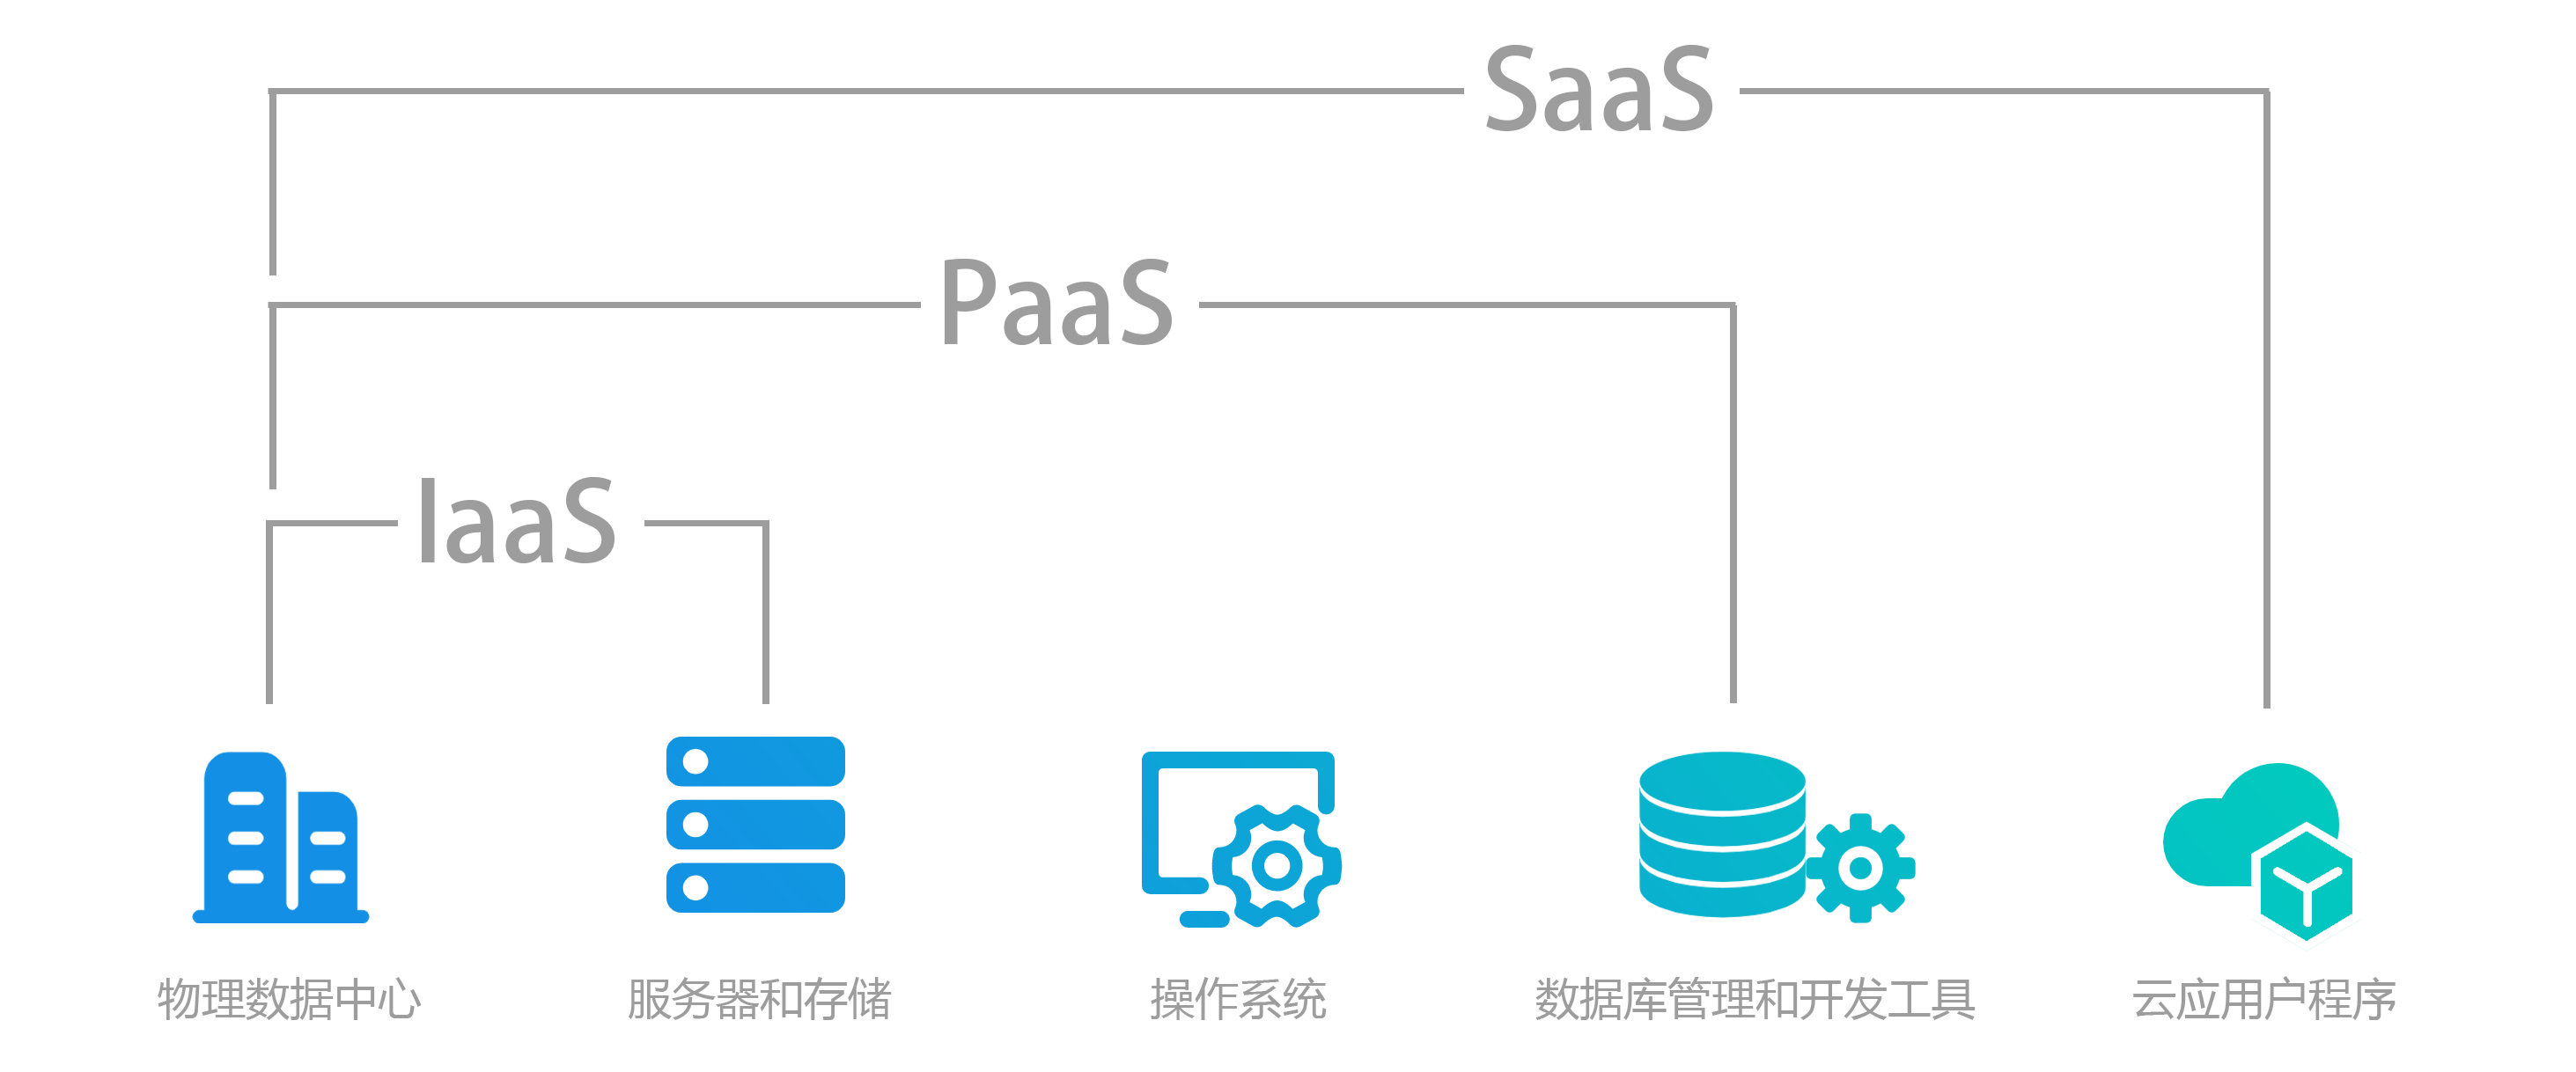 SaaS，PaaS和IaaS服务模型